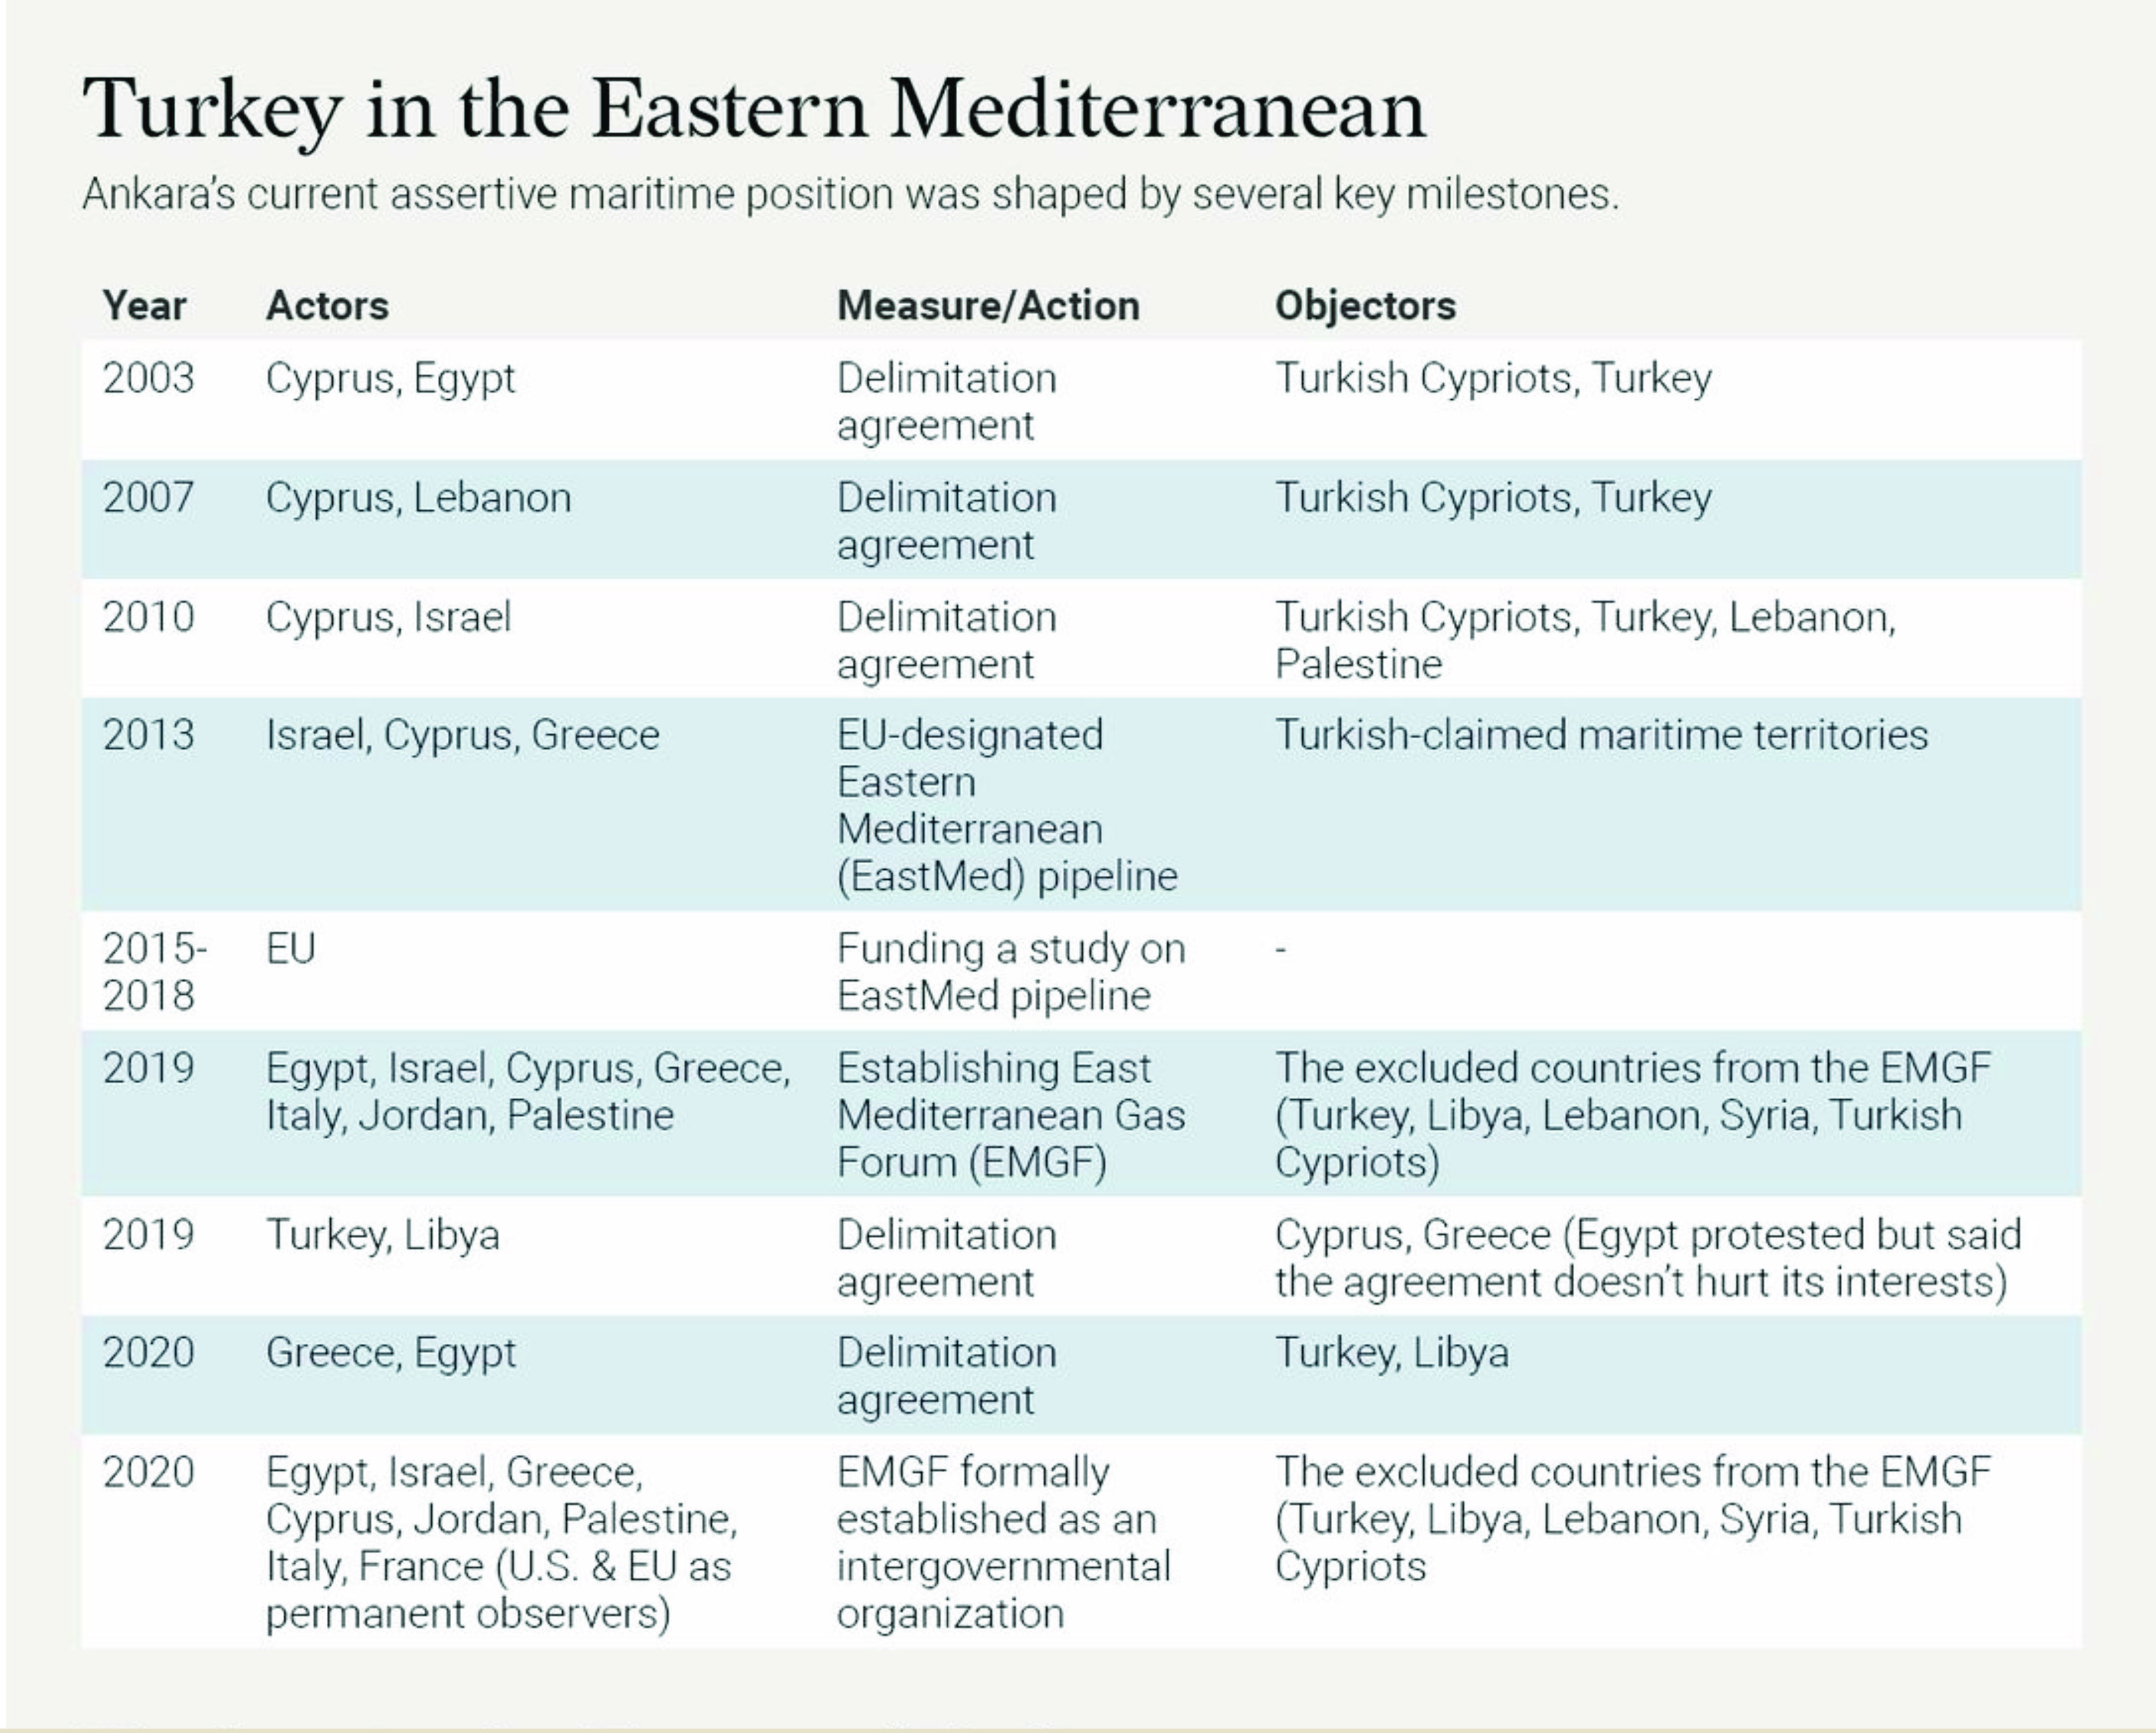 Turkey in the Eastern Mediterranean – Key Milestones